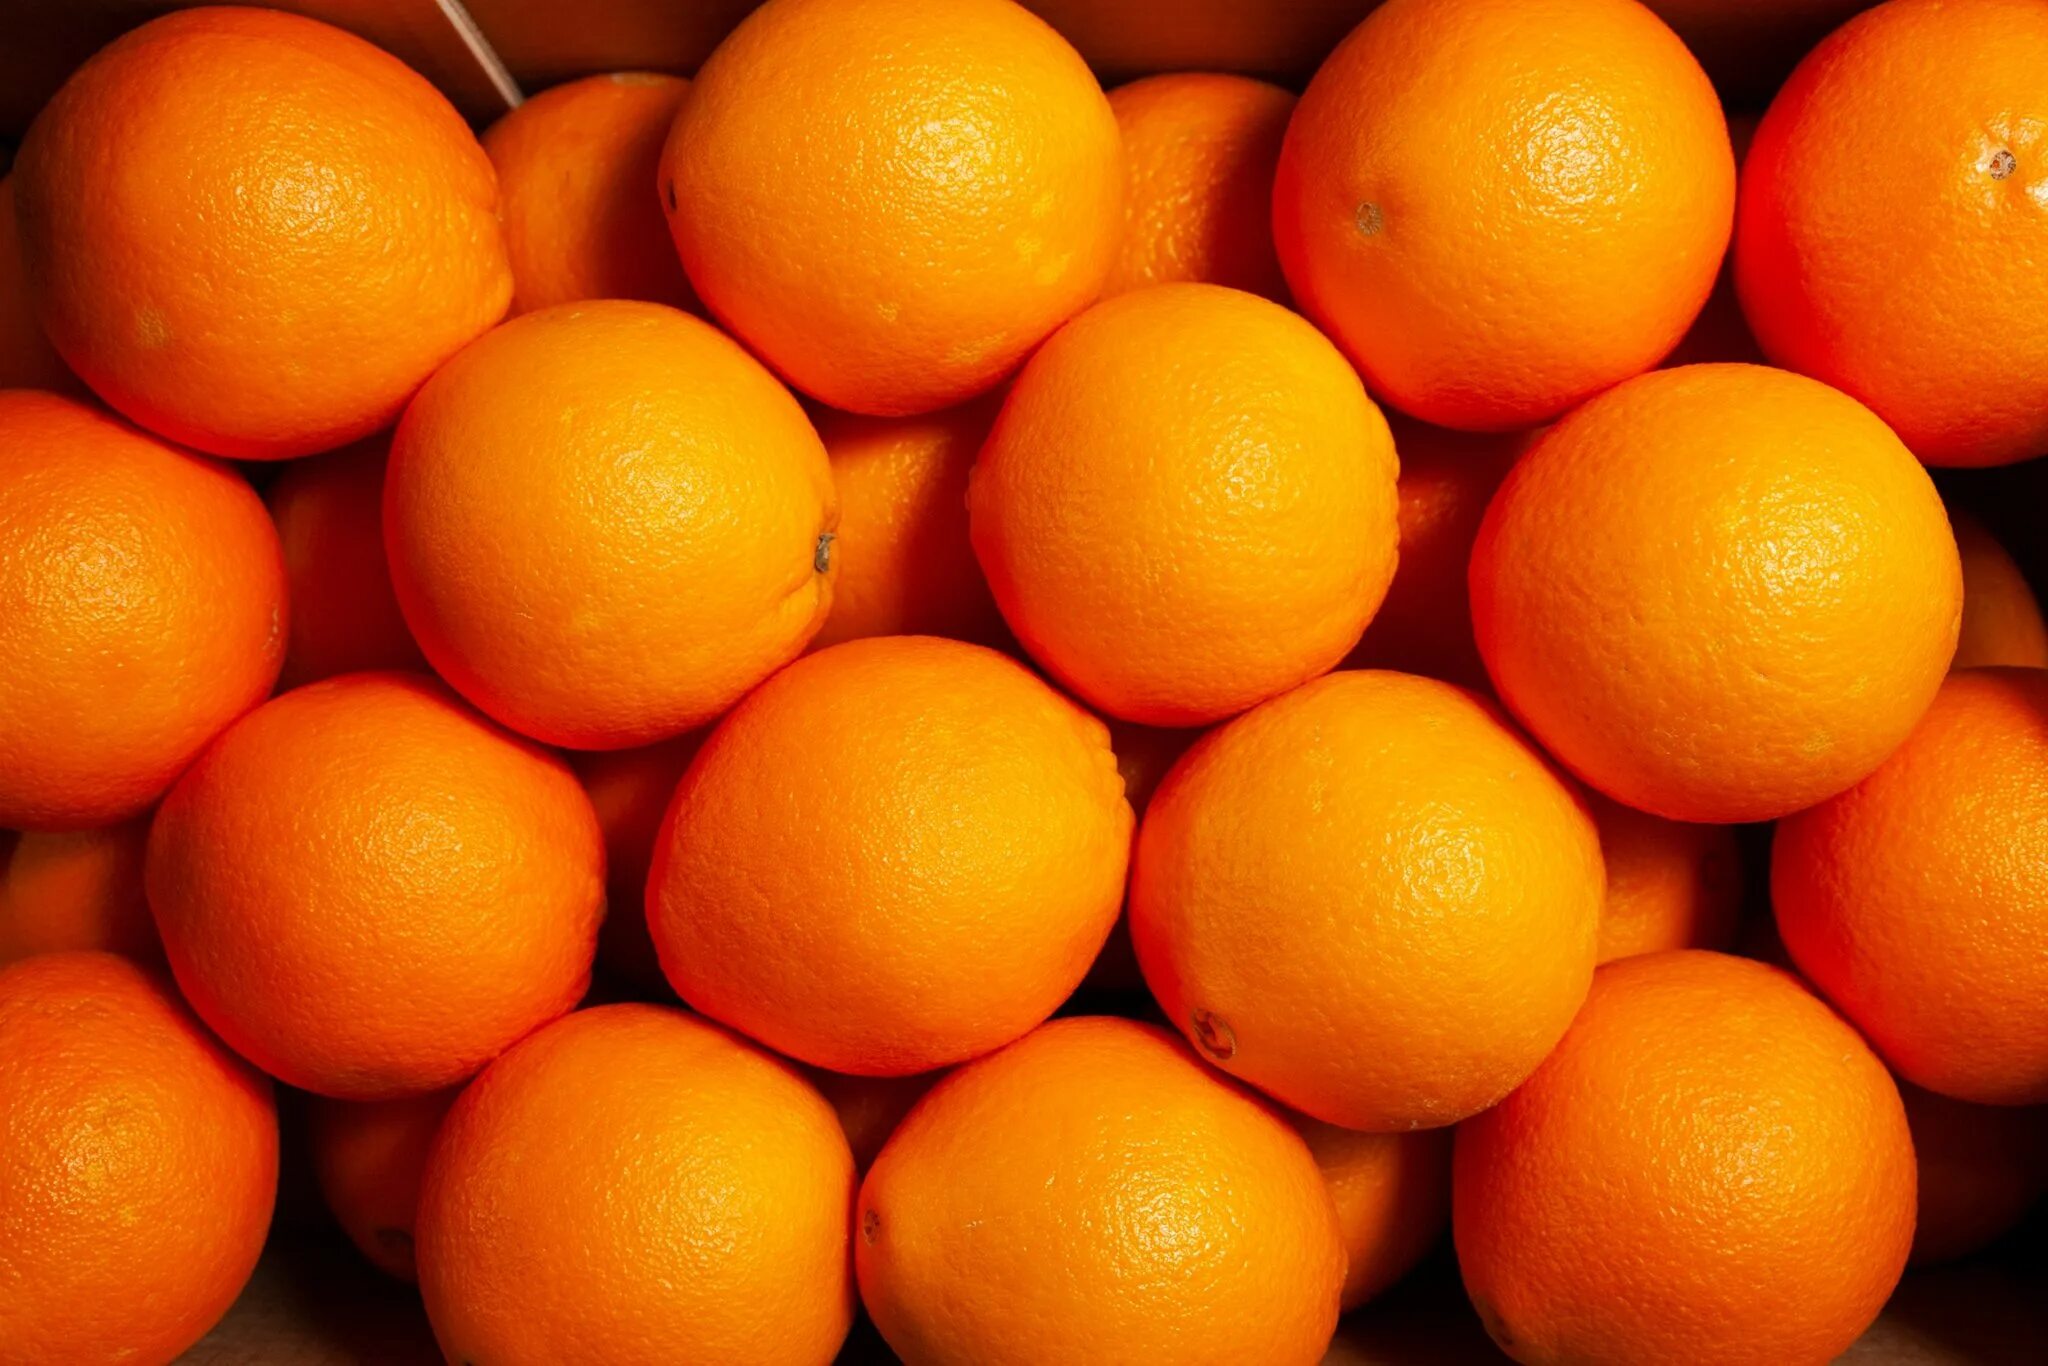 They like oranges. Померанец цвета оранж. Оранжевый цвет. Ярко оранжевый. Ярко оранжевый цвет.